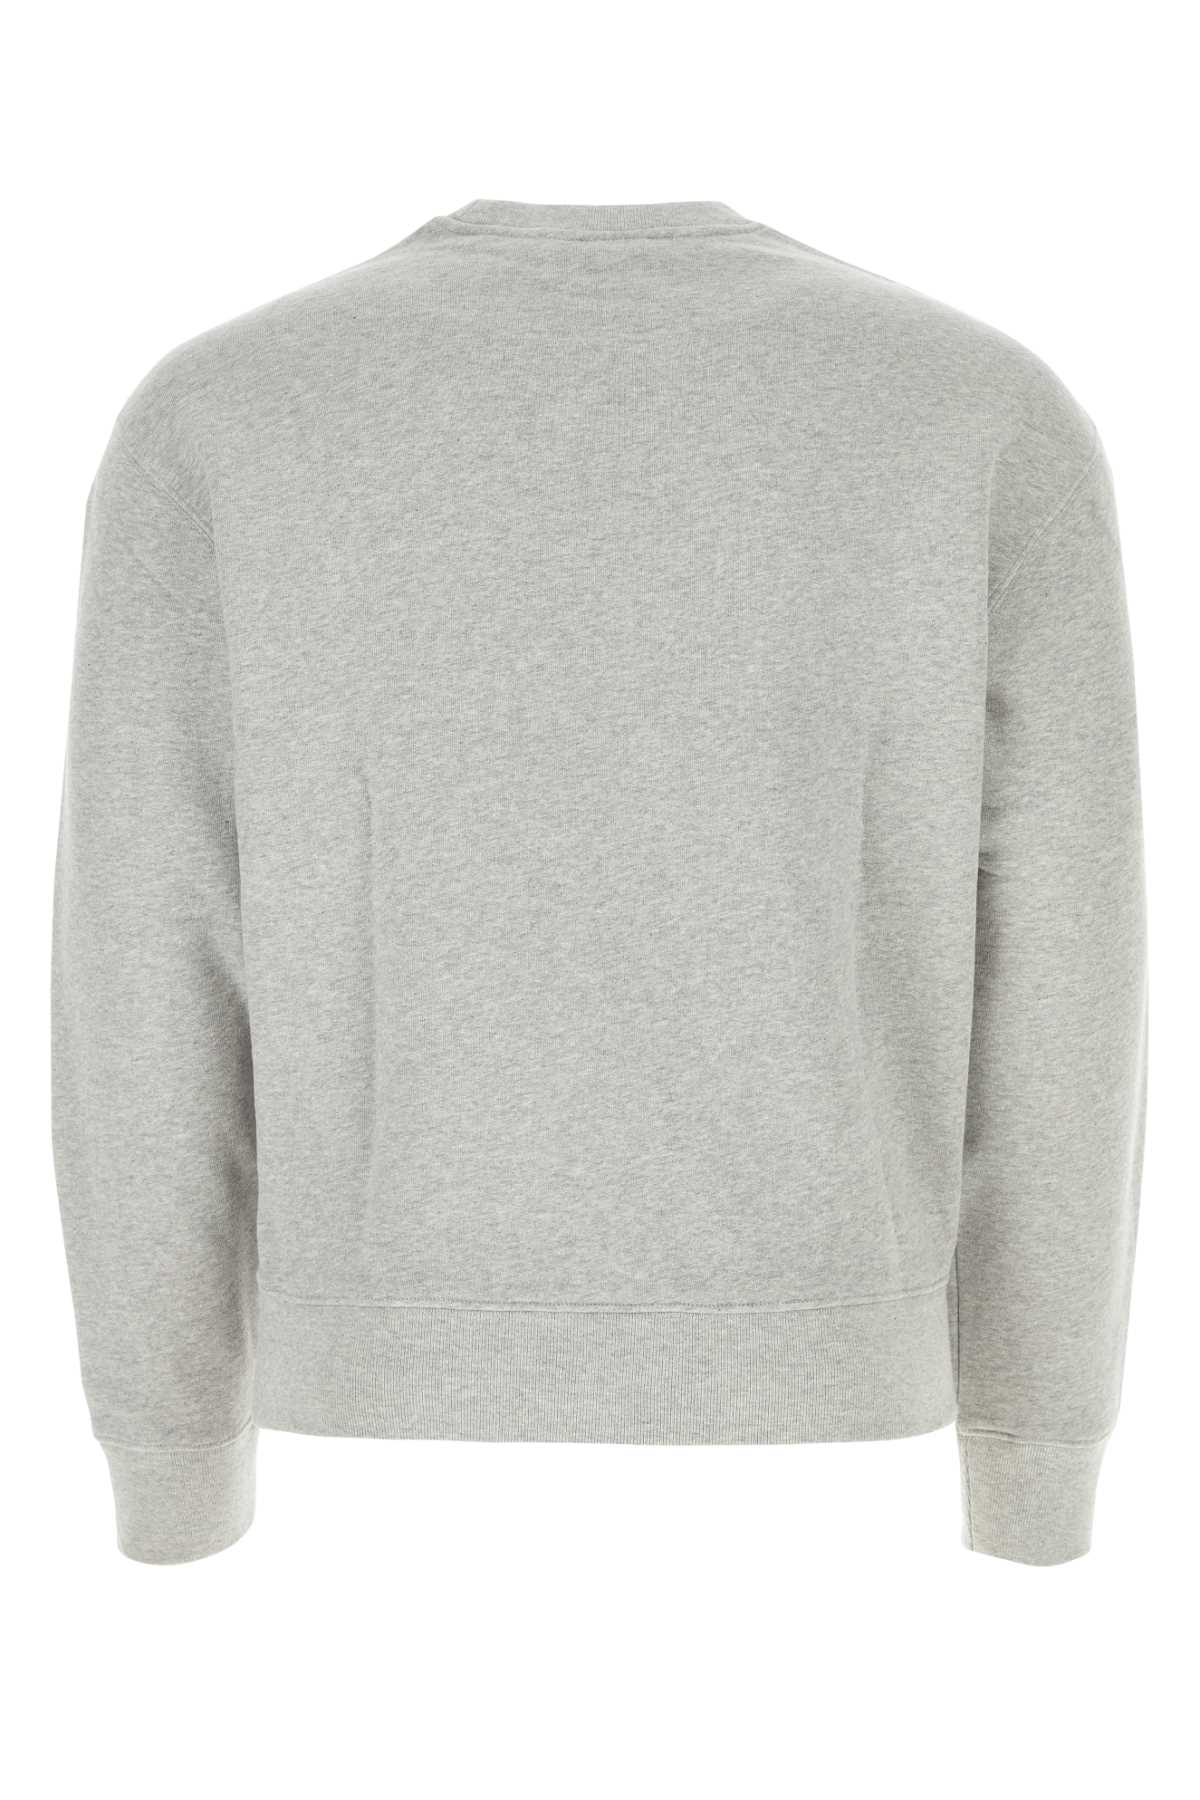 Maison Kitsuné Melange Grey Cotton Sweatshirt In Light Grey Melange